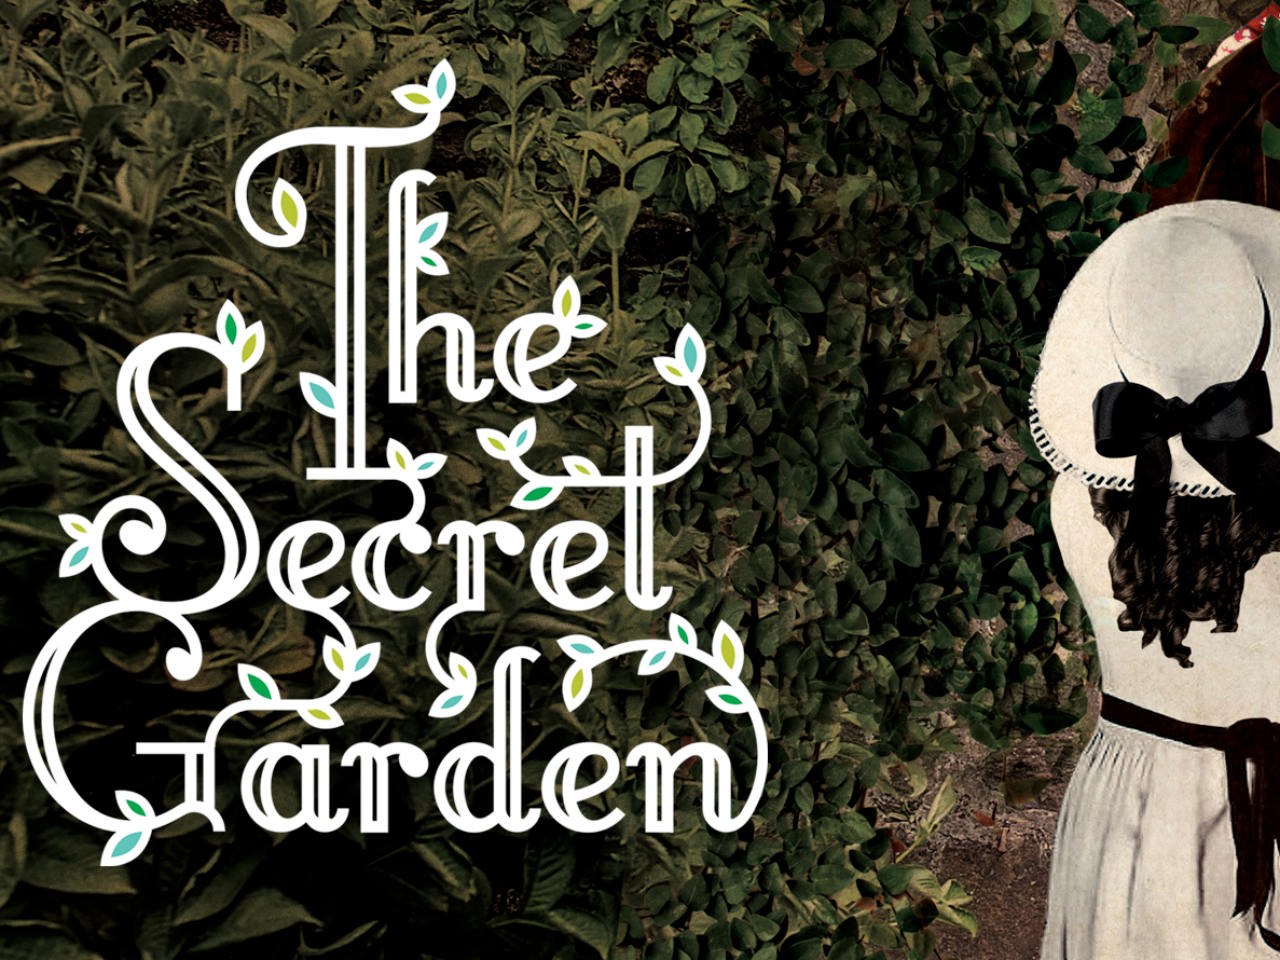 The secret garden sign